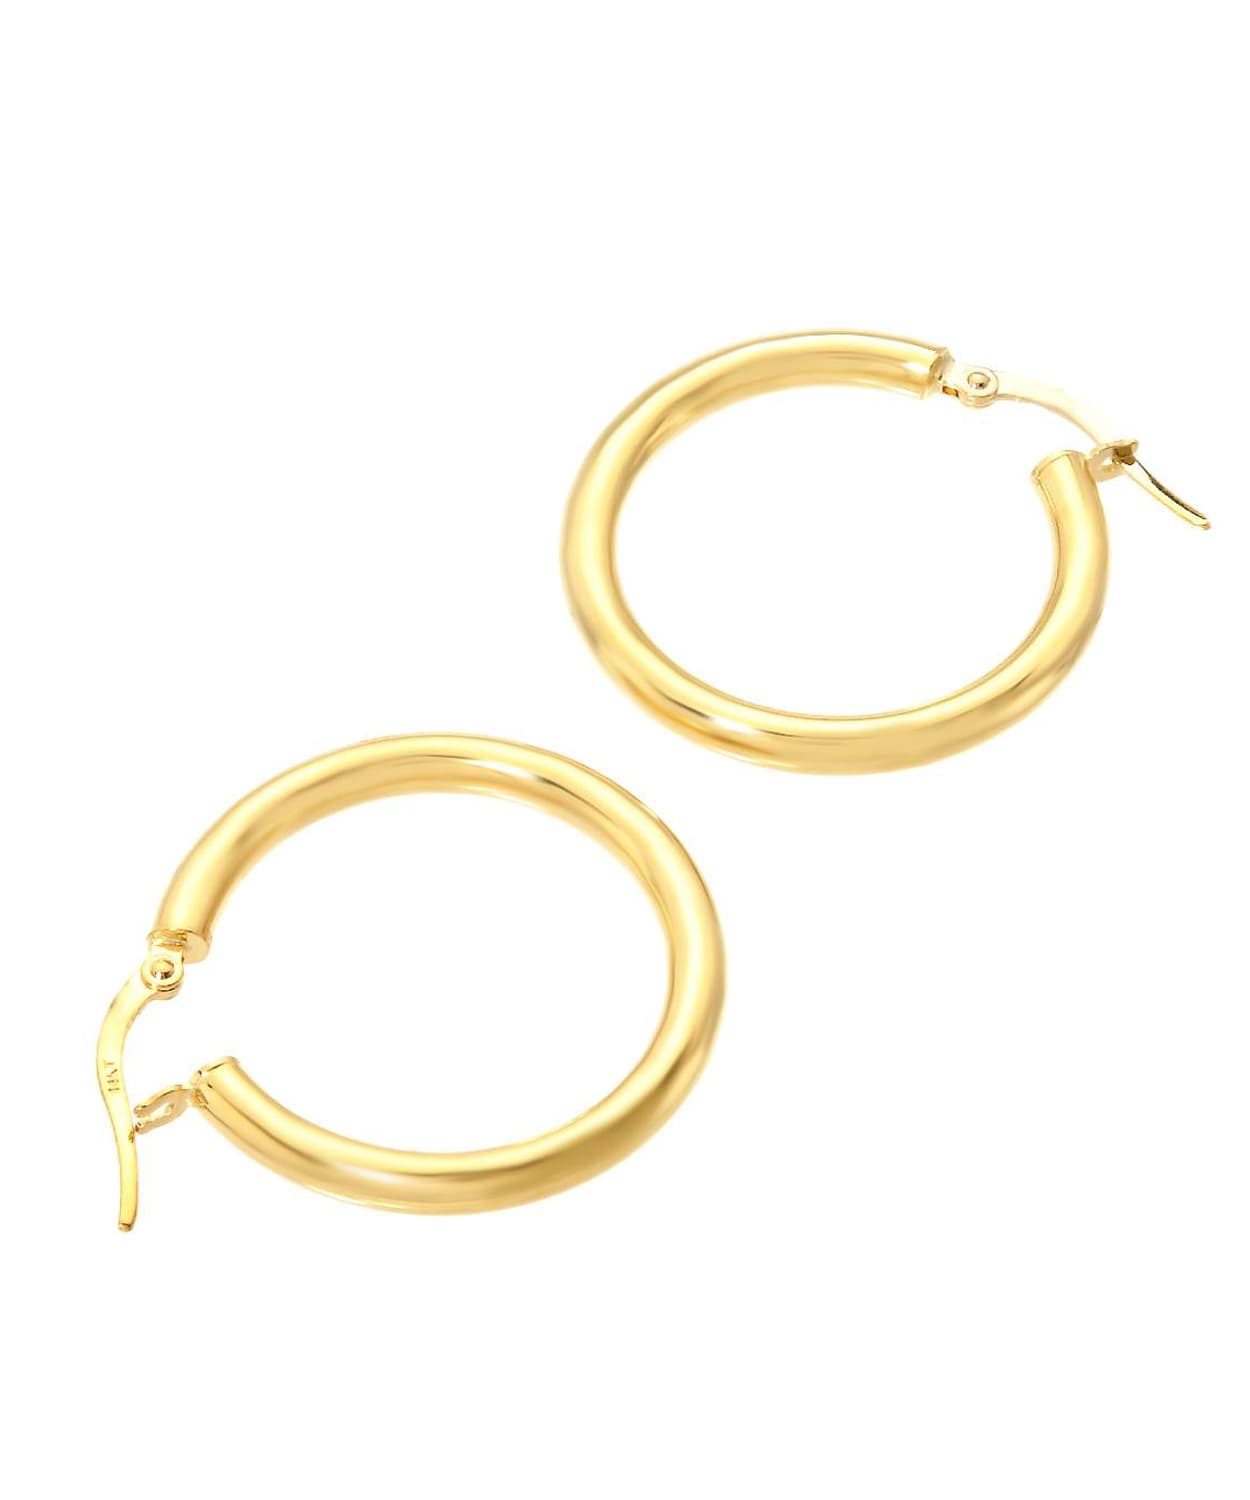 Esemco 14k Yellow Gold Classic Hoop Earrings View 2